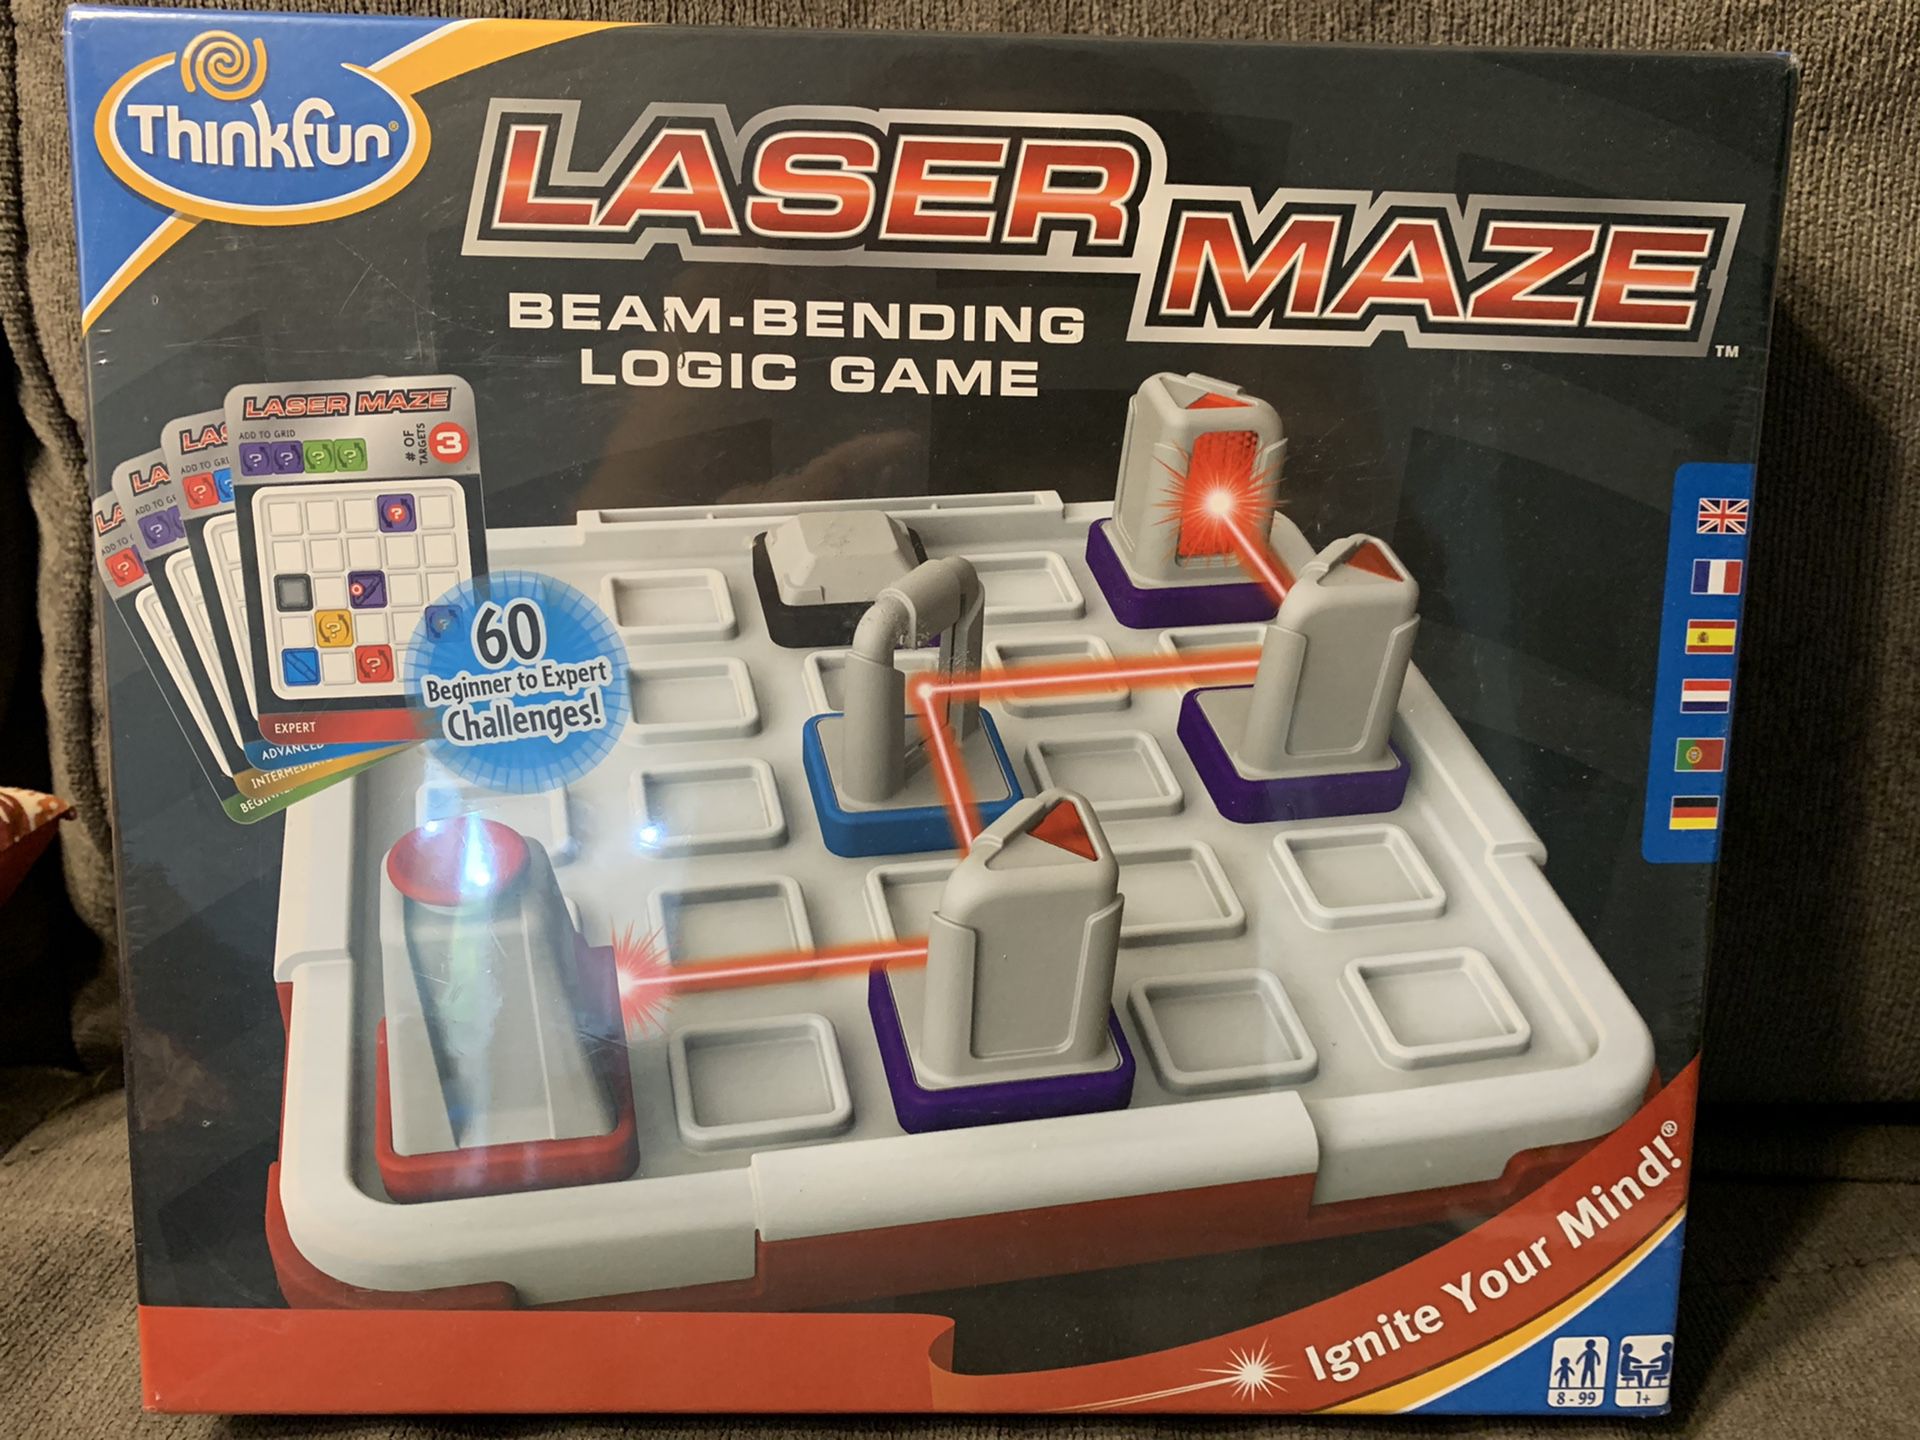 Thinkfun laser maze - sealed box